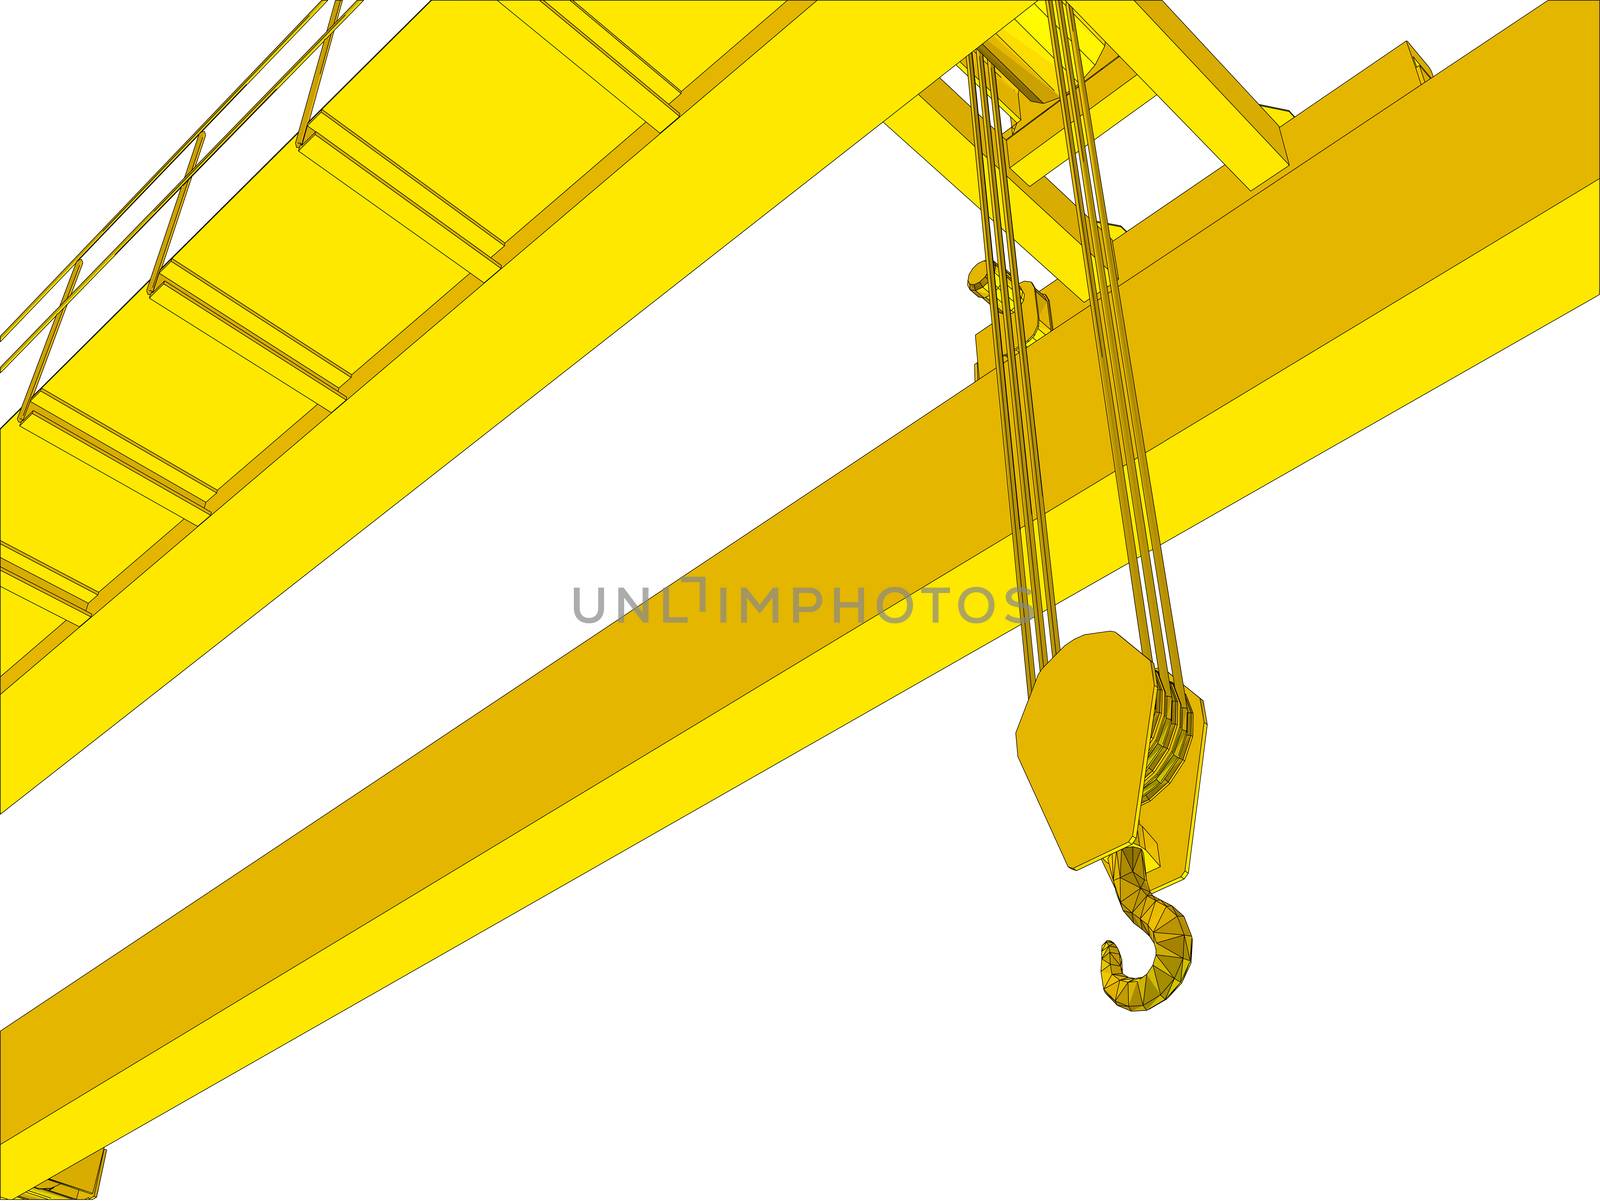 Factory overhead crane on white background. 3d illustration